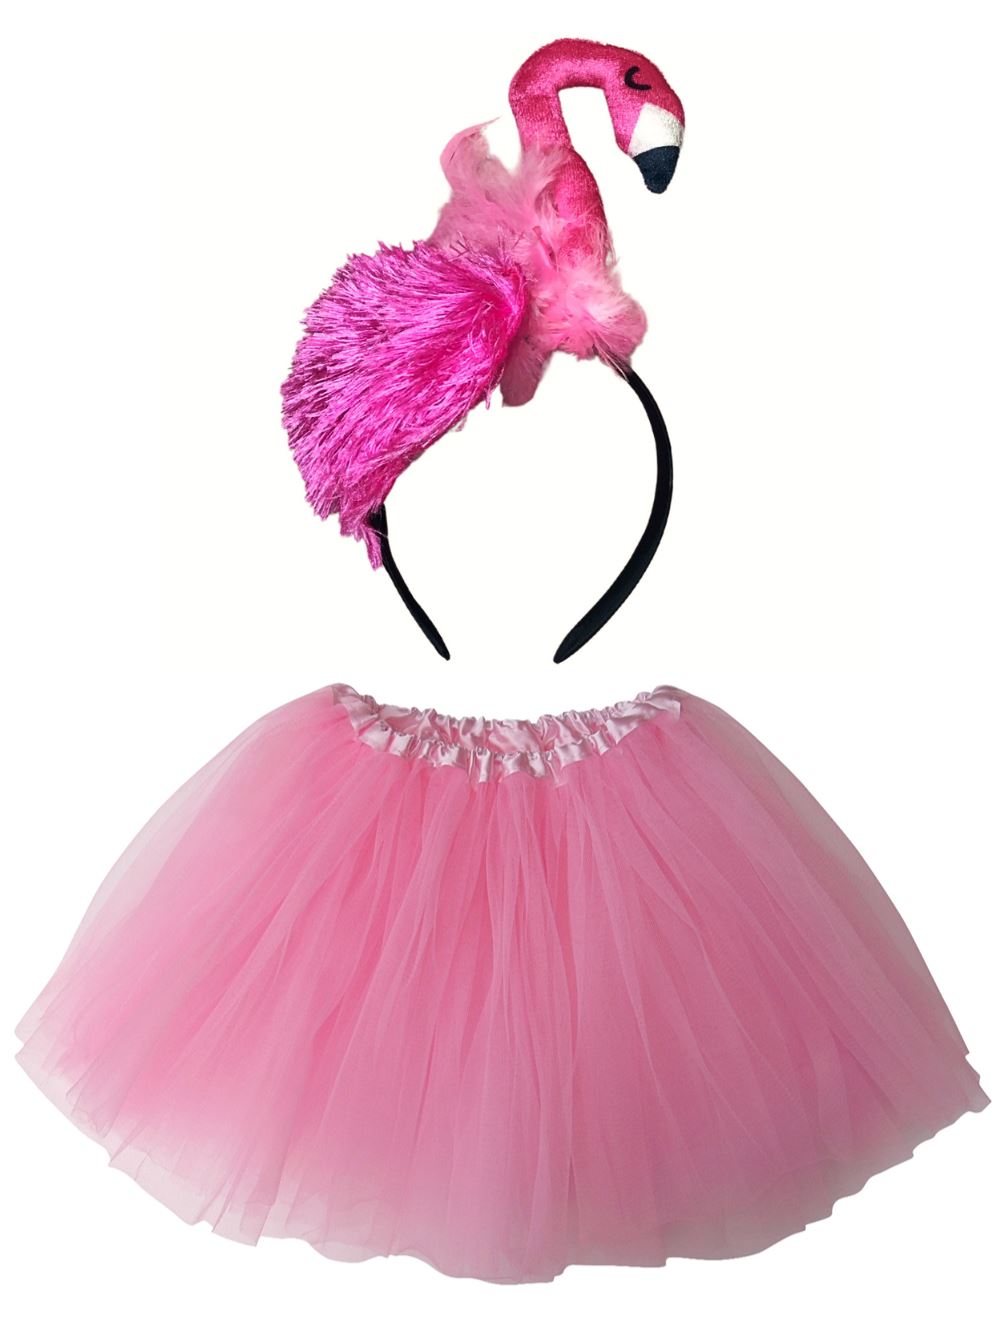 Adult Pink Flamingo Costume - Tutu Skirt & Headband Set for Adult or Plus Size - Sydney So Sweet